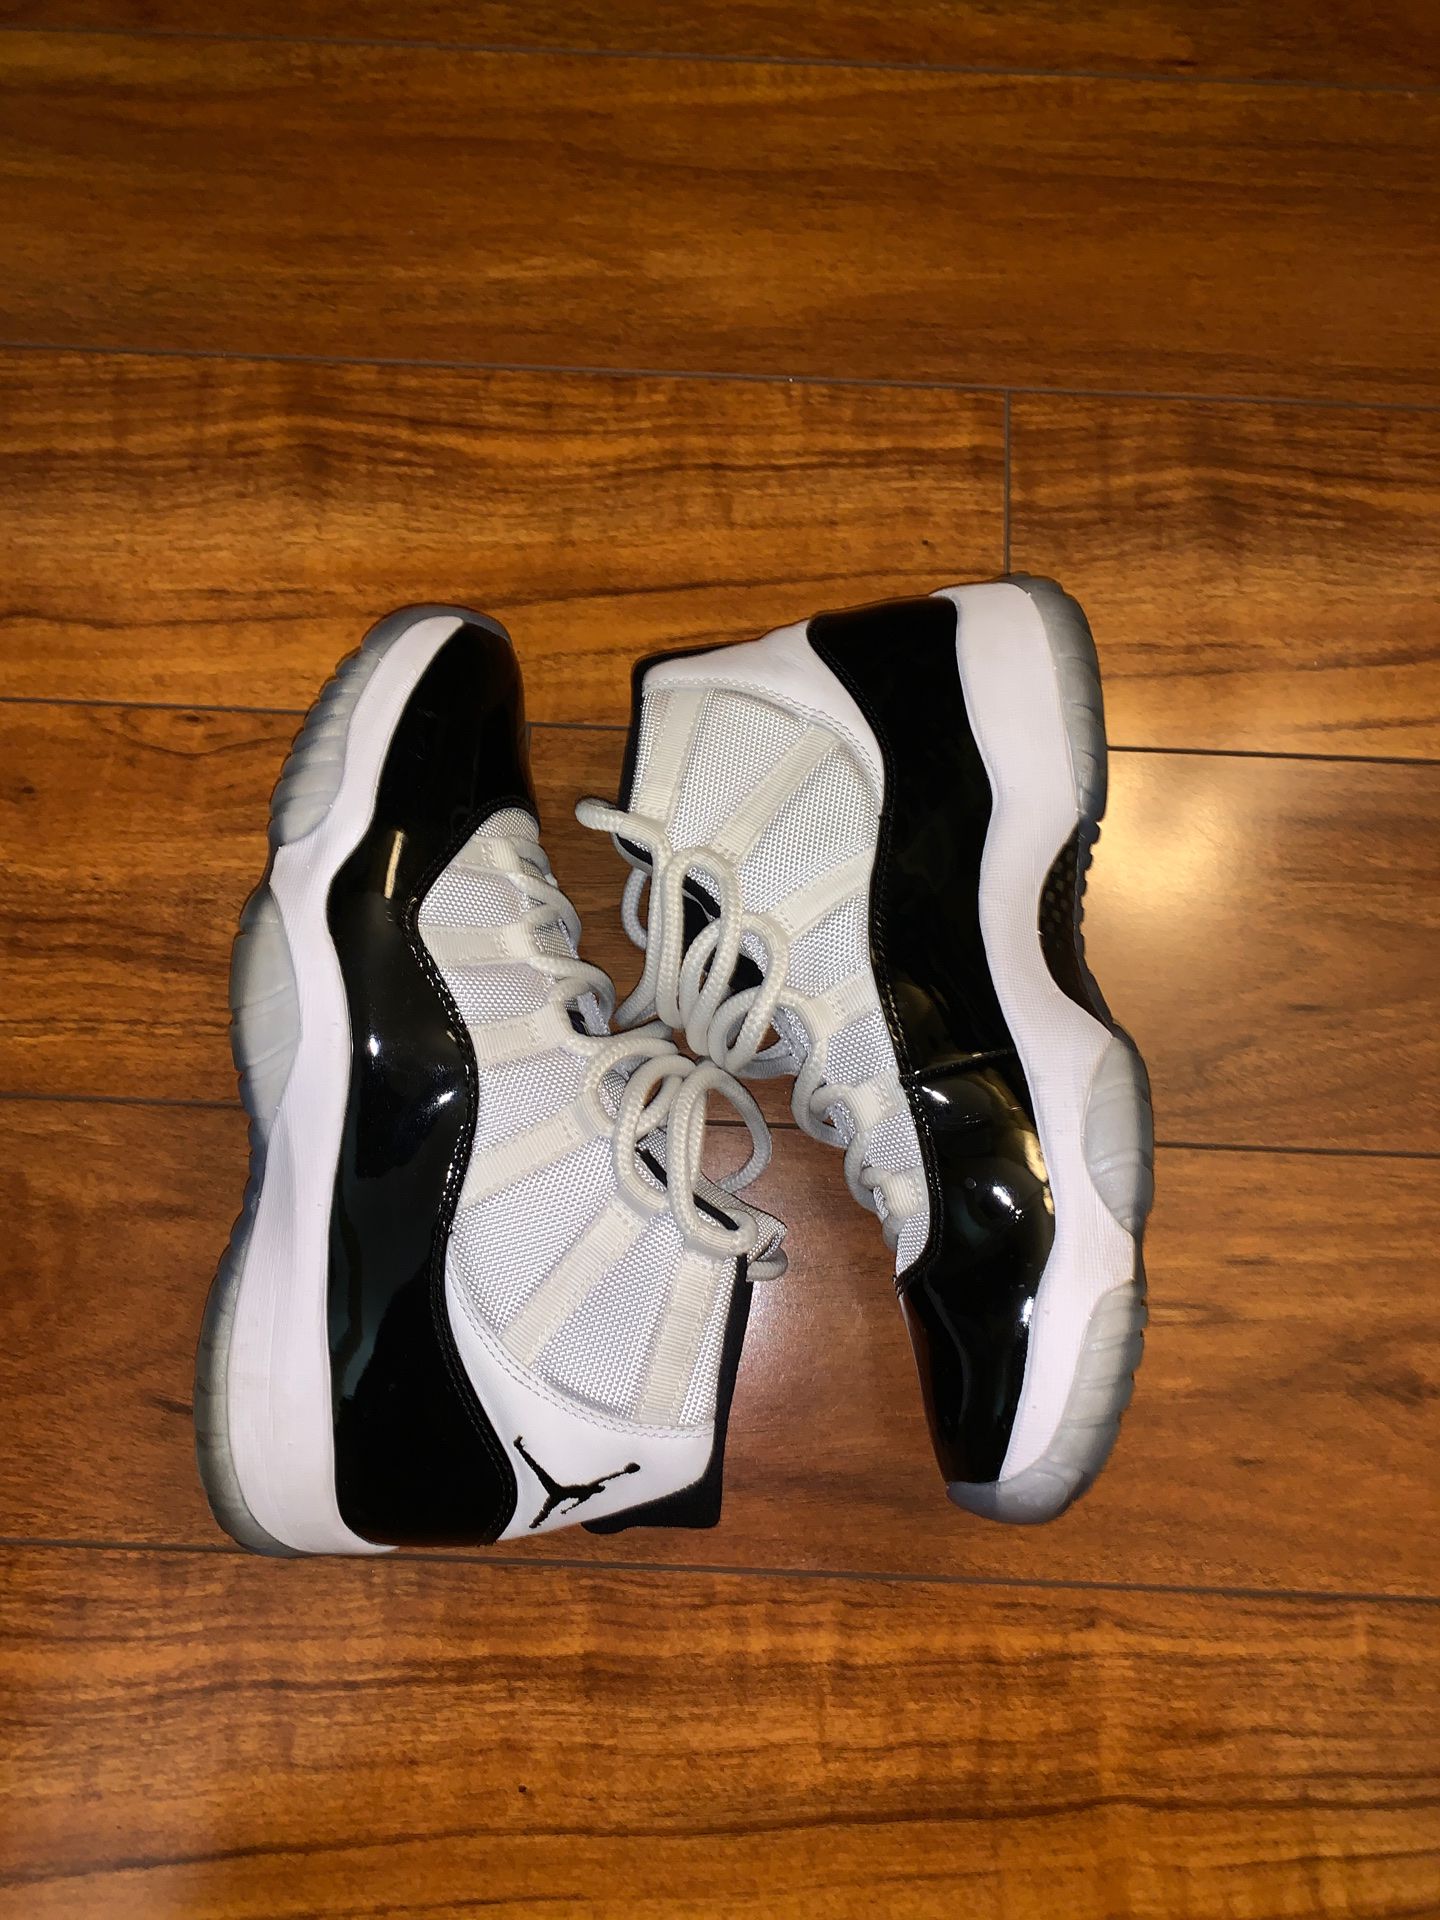 Size 9 Jordan 11 Retro Concord 2018